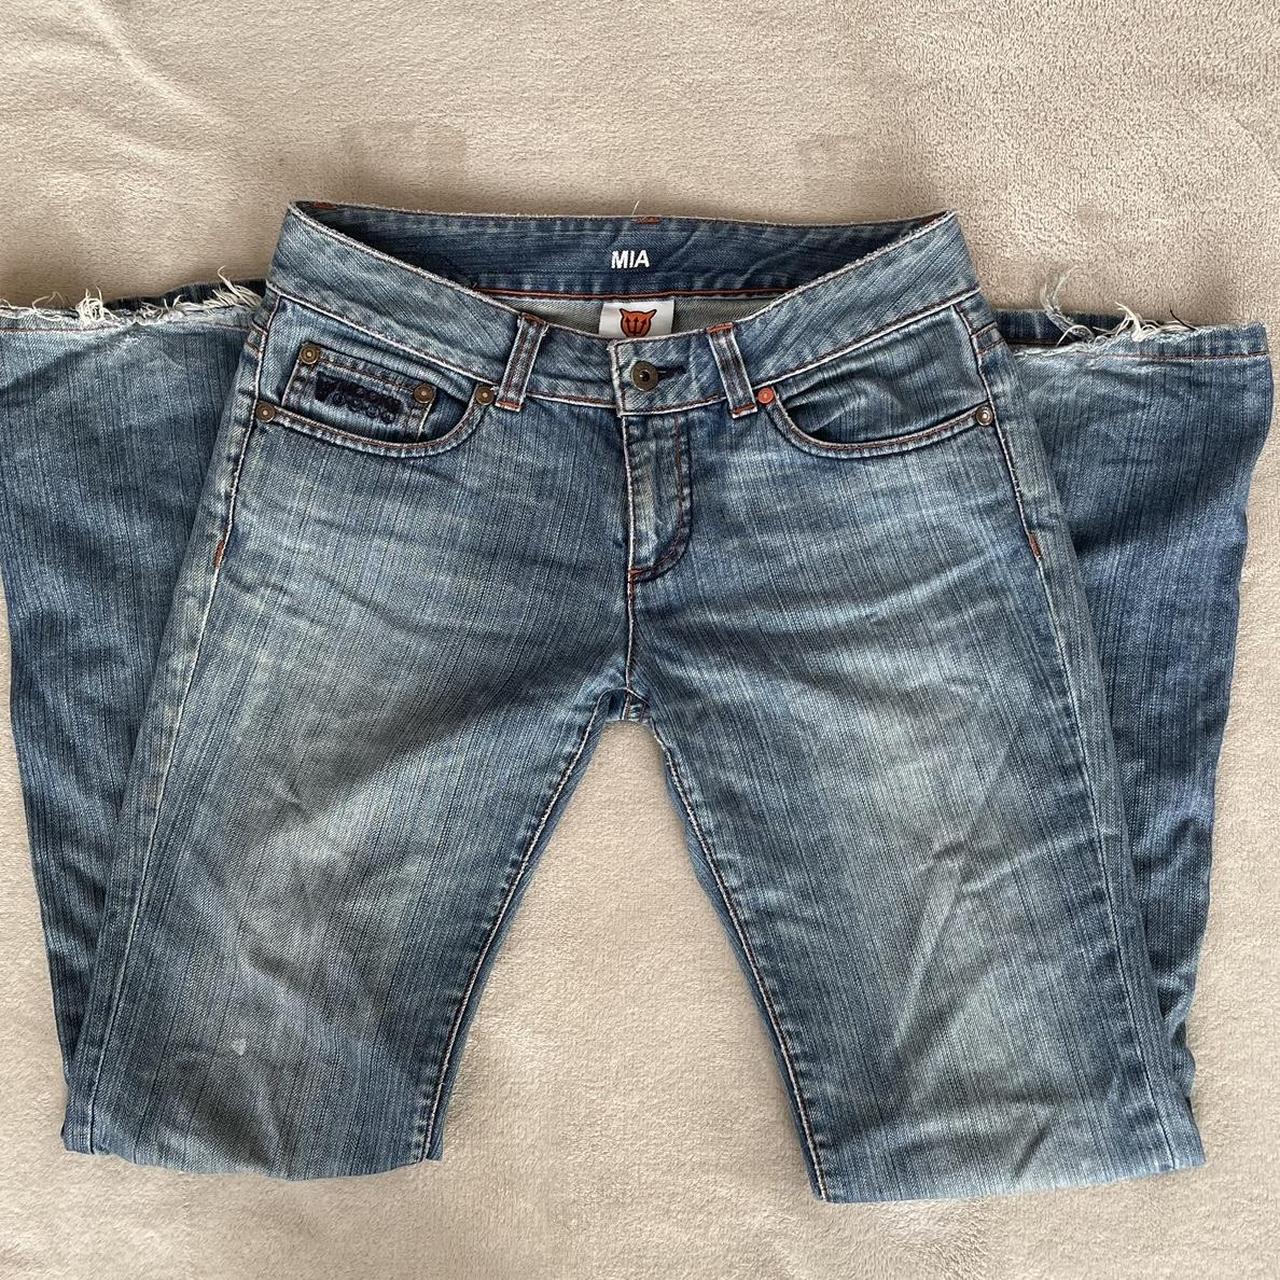 vintage mooks low waist, flare jeans 🍊 - obvious... - Depop